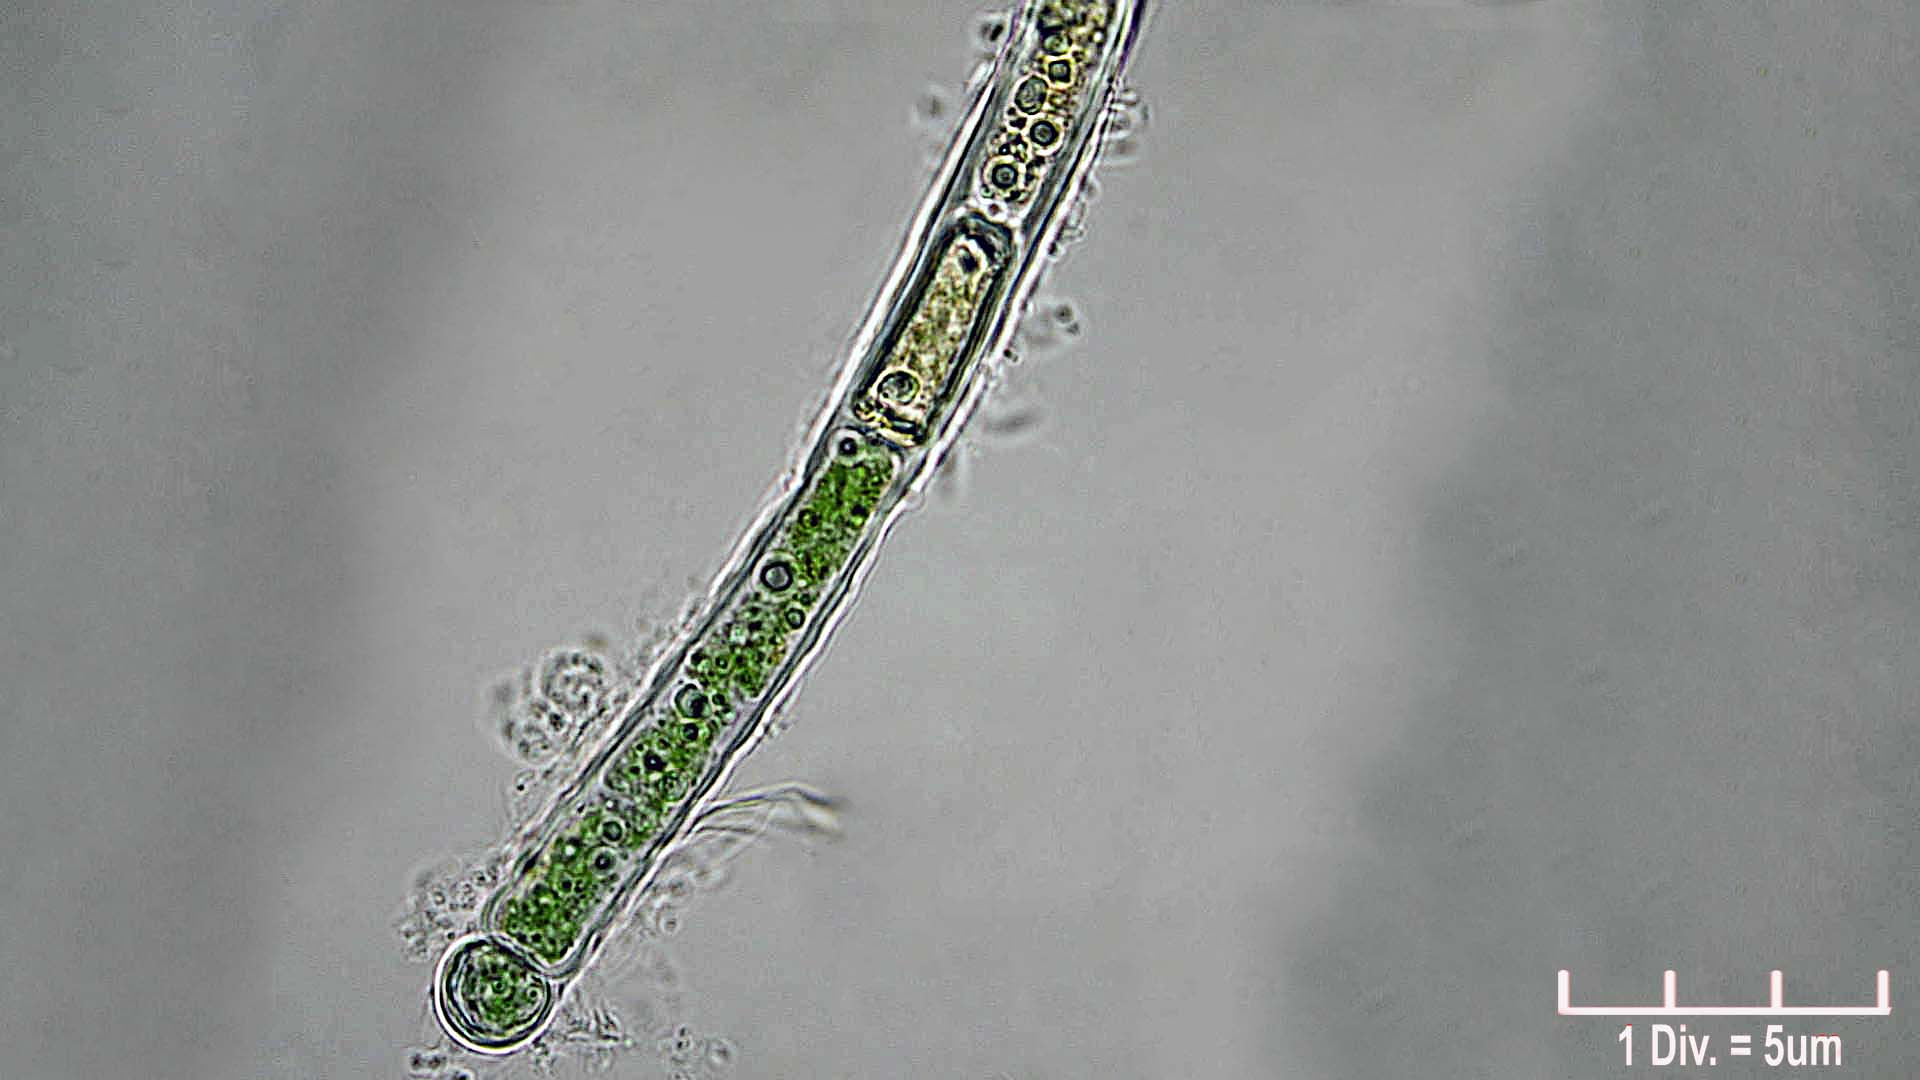 ././././Cyanobacteria/Nostocales/Rivulariaceae/Microchaete/tenera/microchaete-tenera-480.jpg